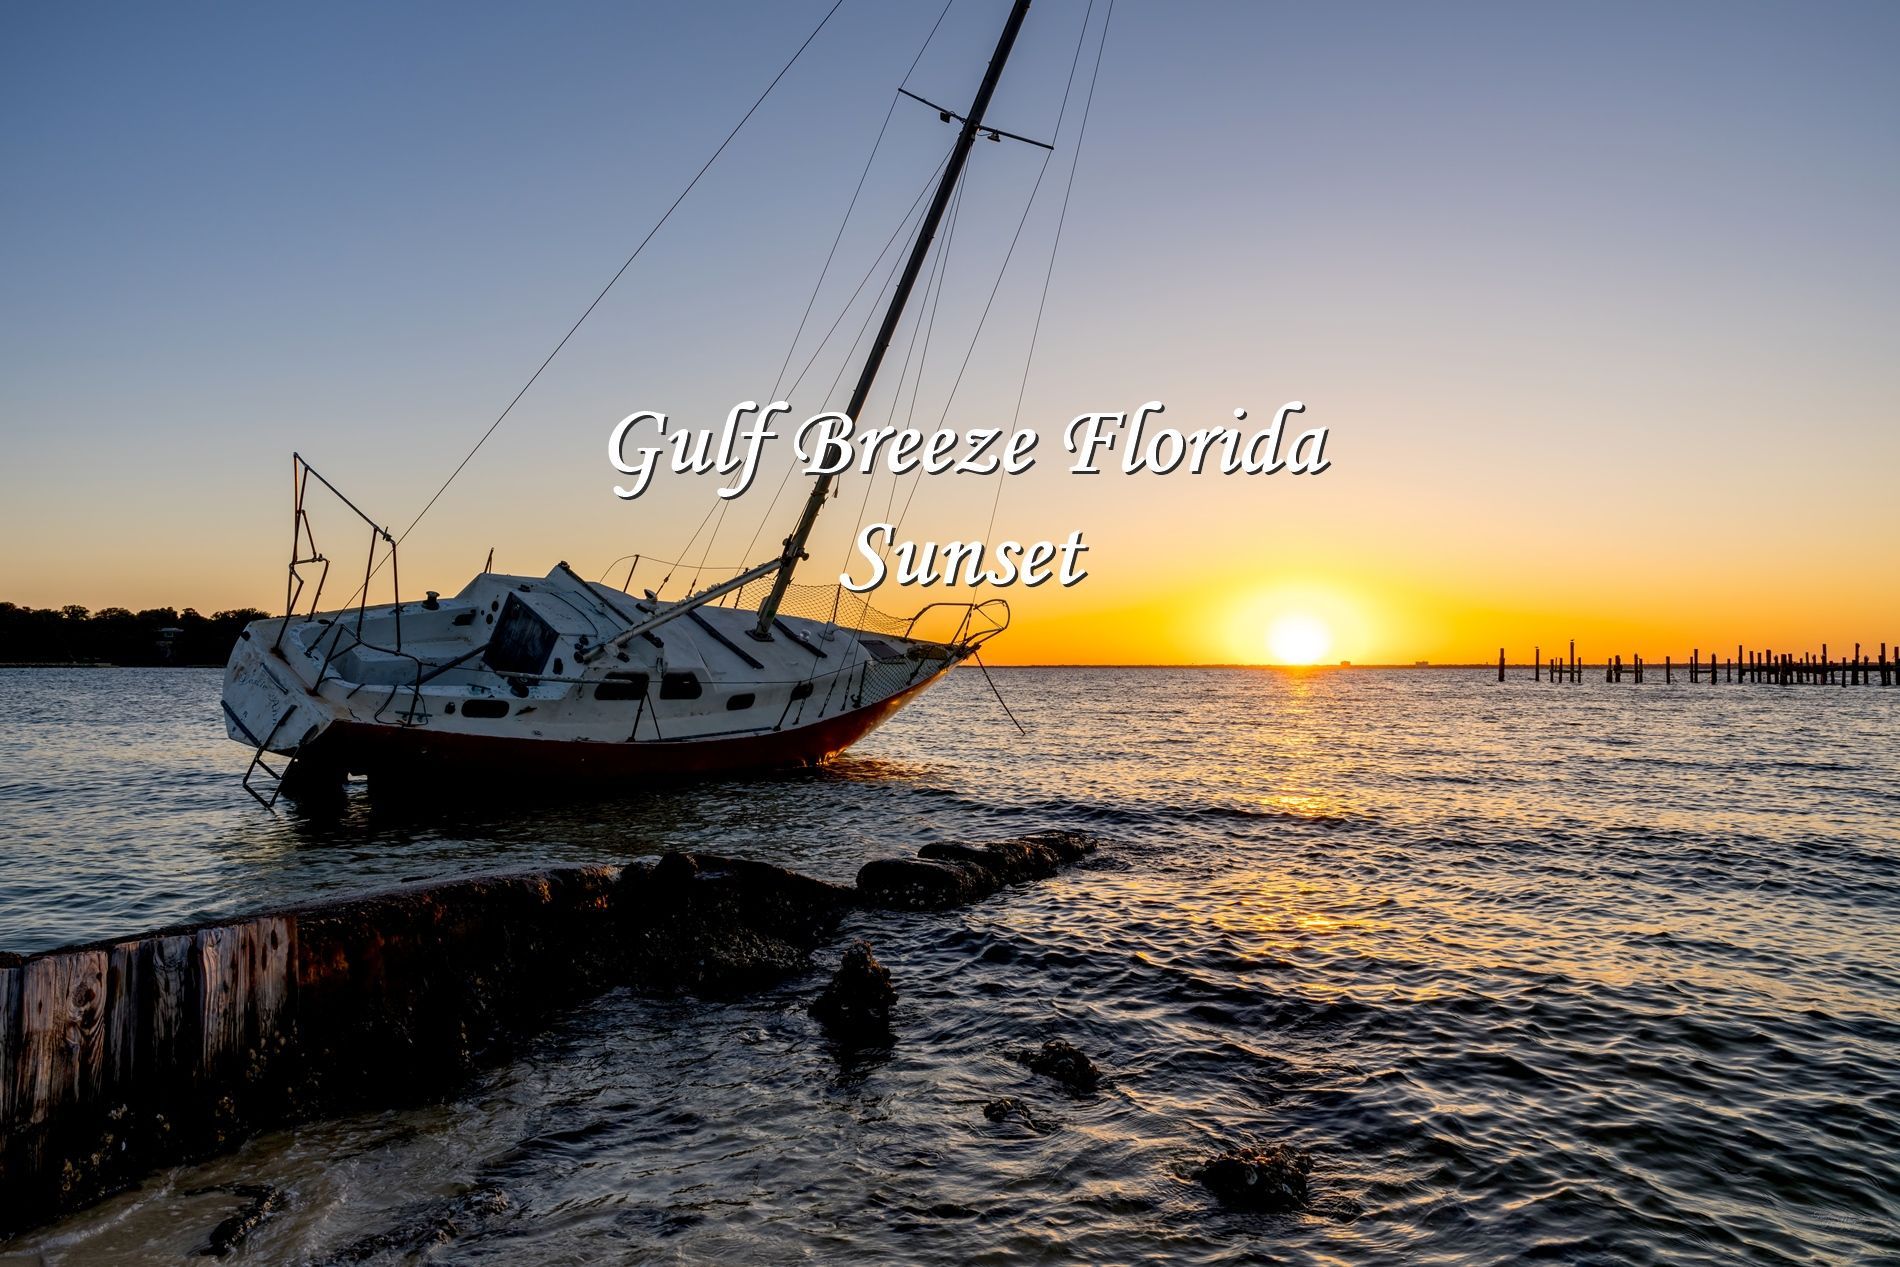 Blog and video about fine art photos of a Gulf Breeze Florida sunset by Jennifer White